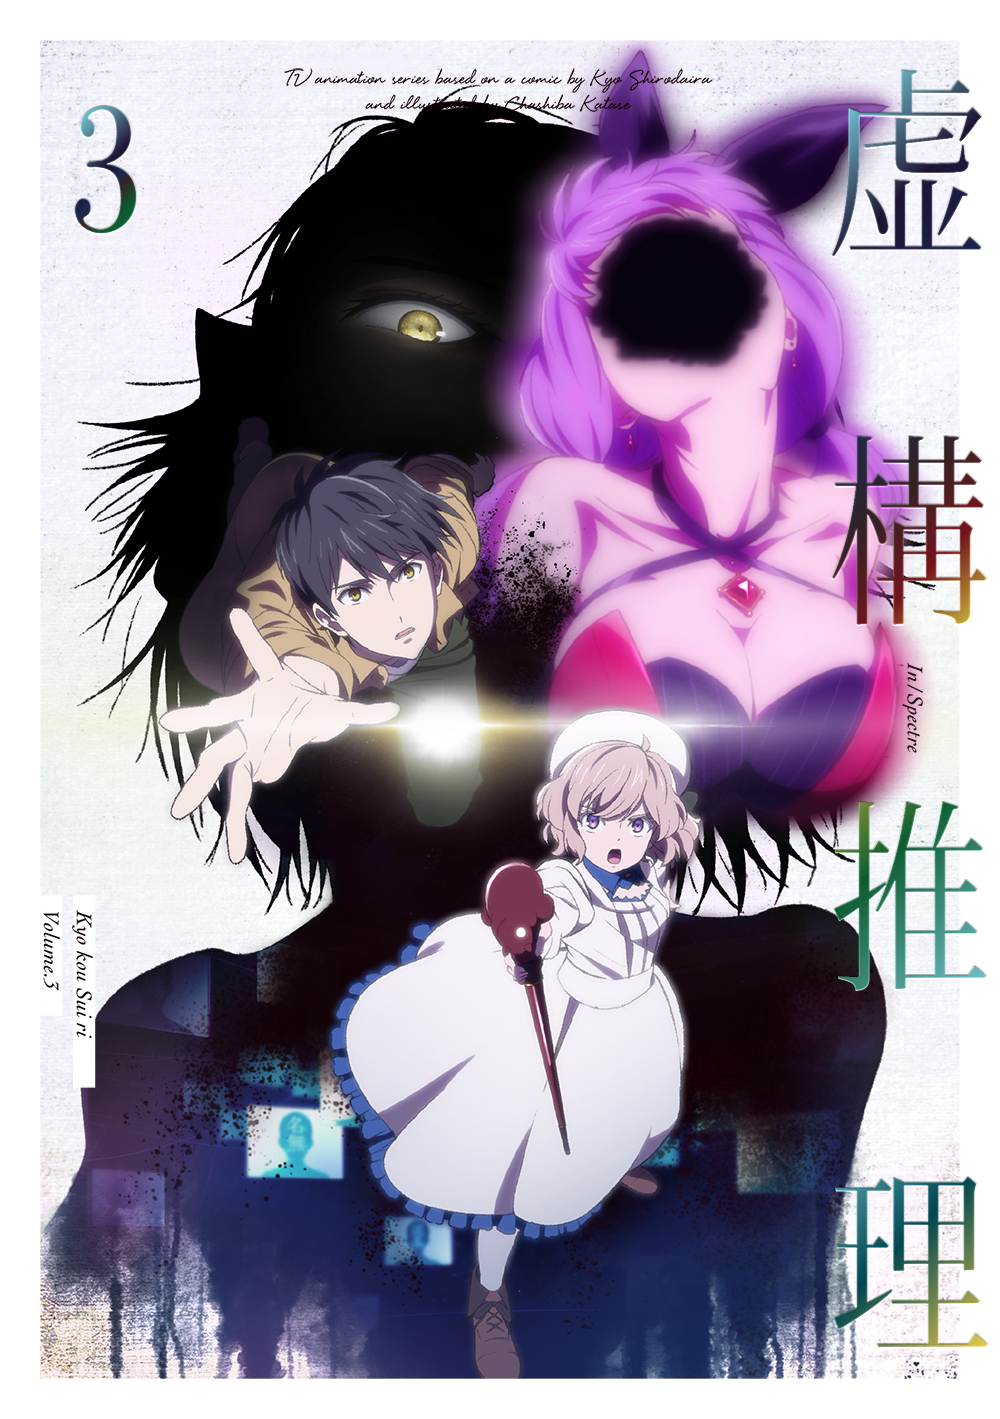 Crunchyroll Kyokou Suiri (In/Spectre) Season 2 - Page 9 - AnimeSuki Forum